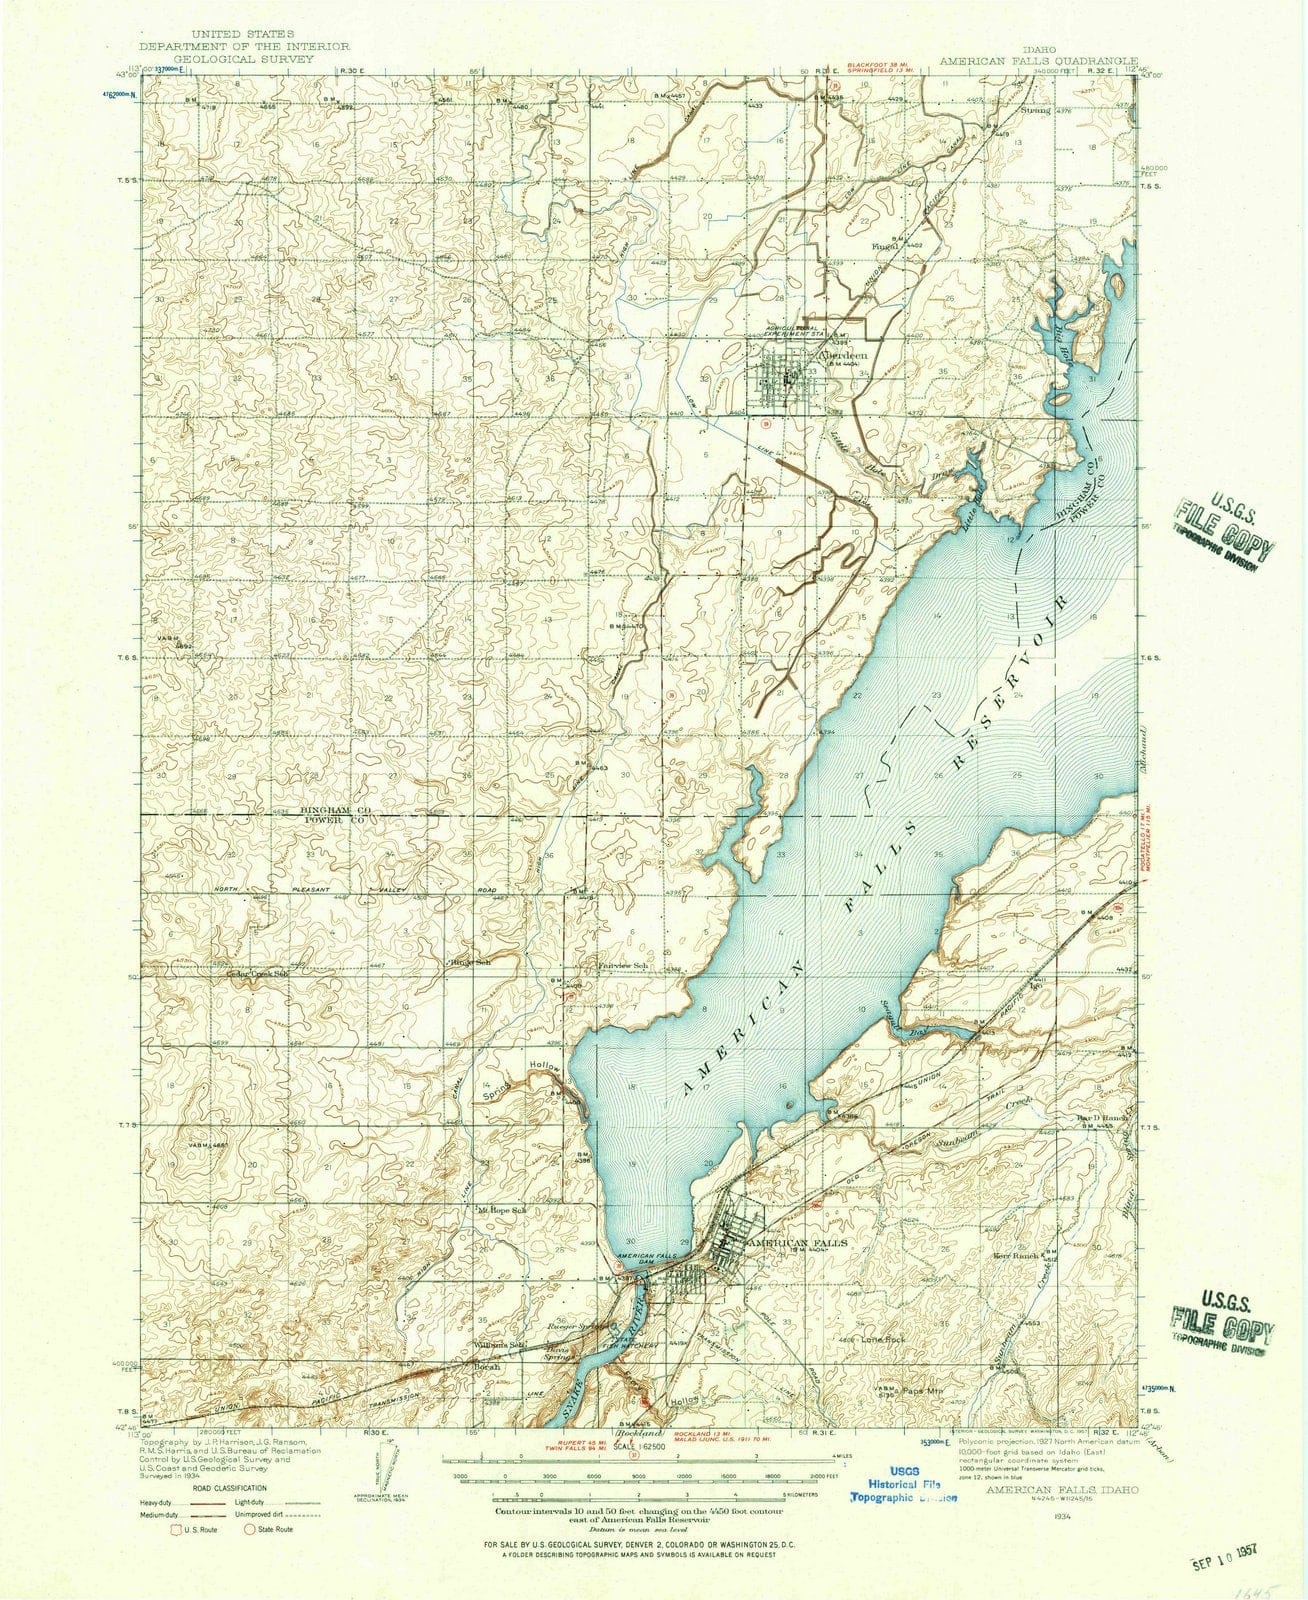 1934 American Falls, ID - Idaho - USGS Topographic Map